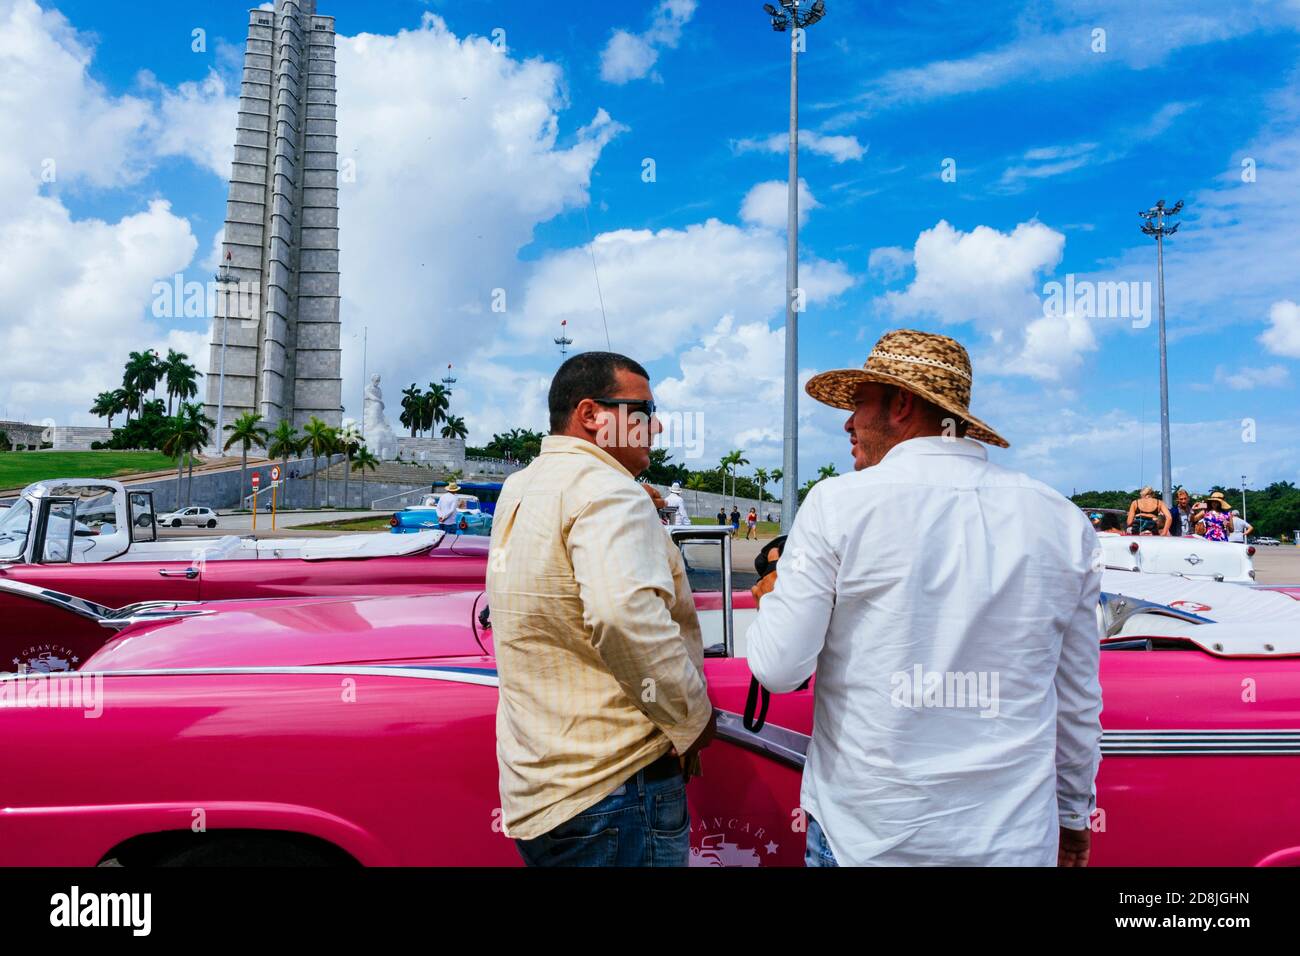 Taxi drivers talk in the Revolution Square - Plaza de la revolución, with the Monument to honor José Martí in the background. La Habana - La Havana, C Stock Photo